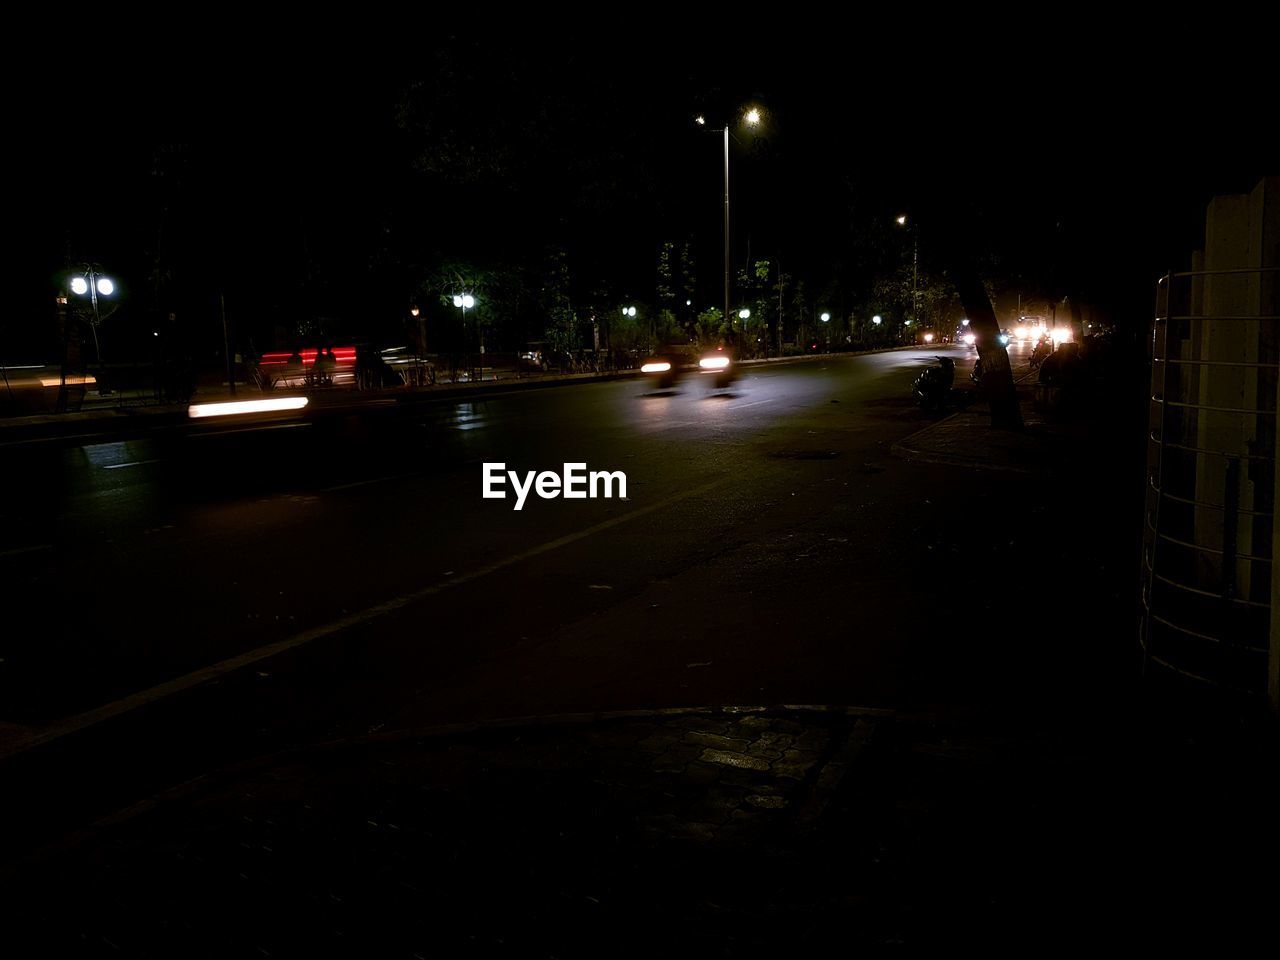 CARS ON STREET AT NIGHT